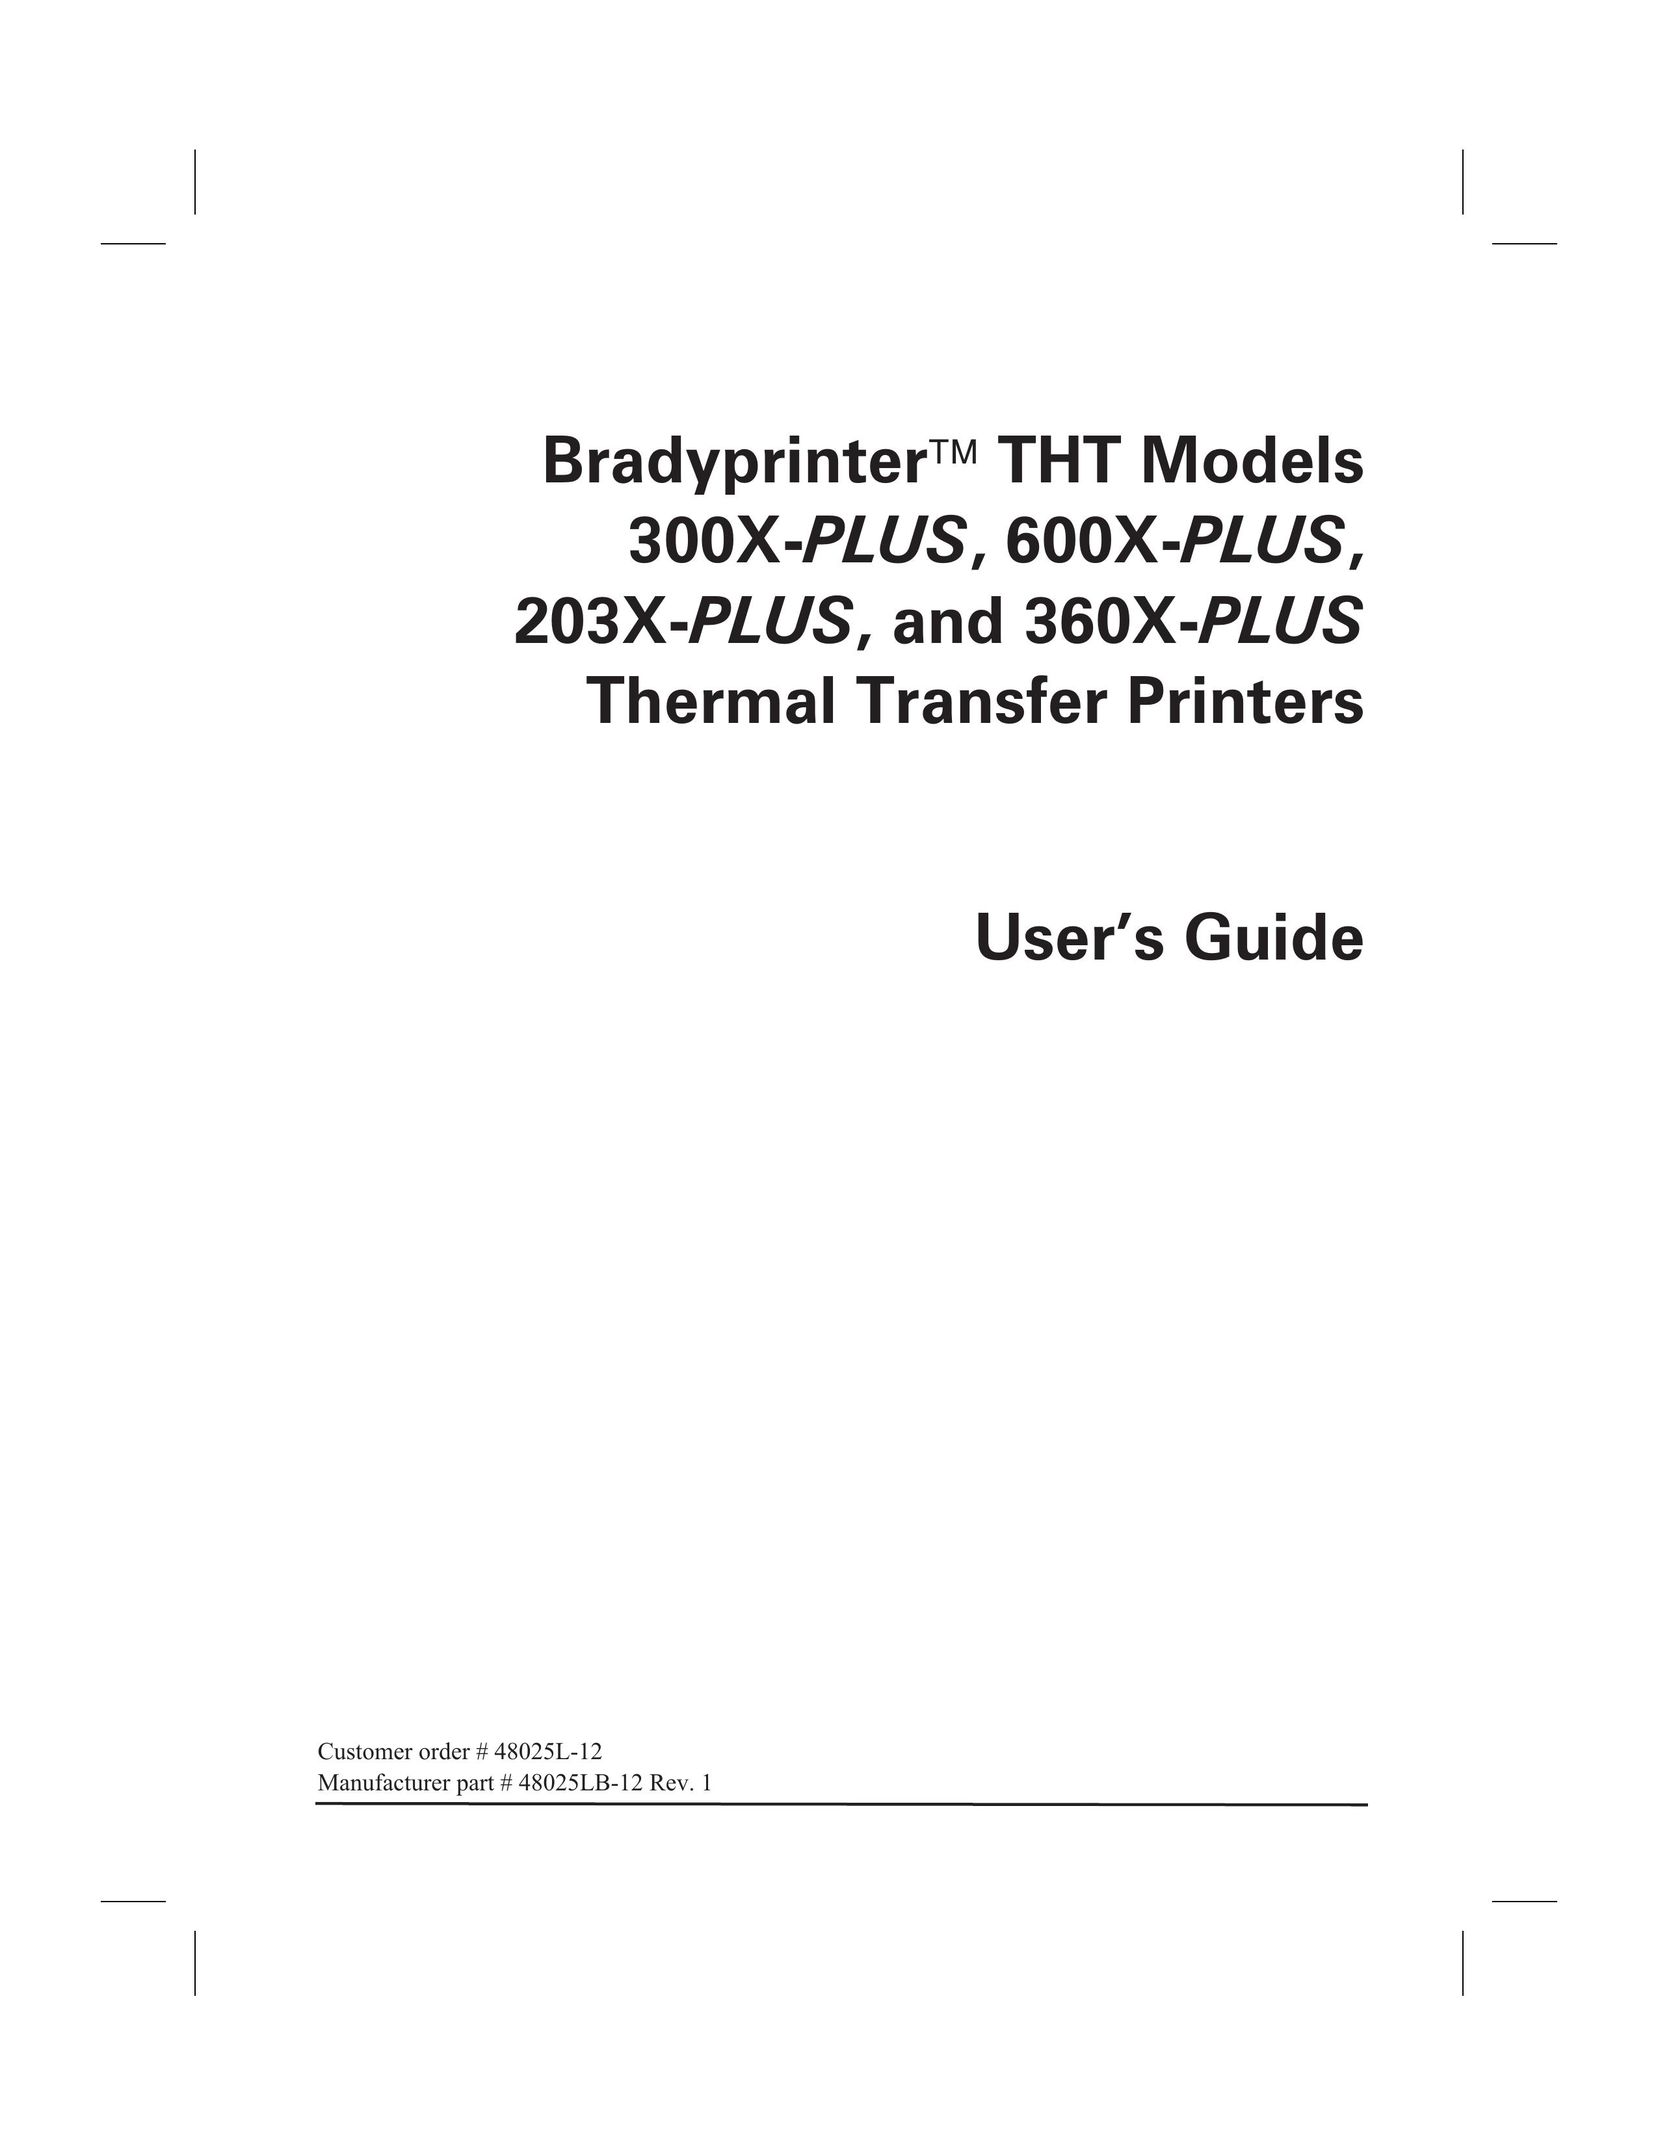 Brady 203X-PLUS Printer User Manual